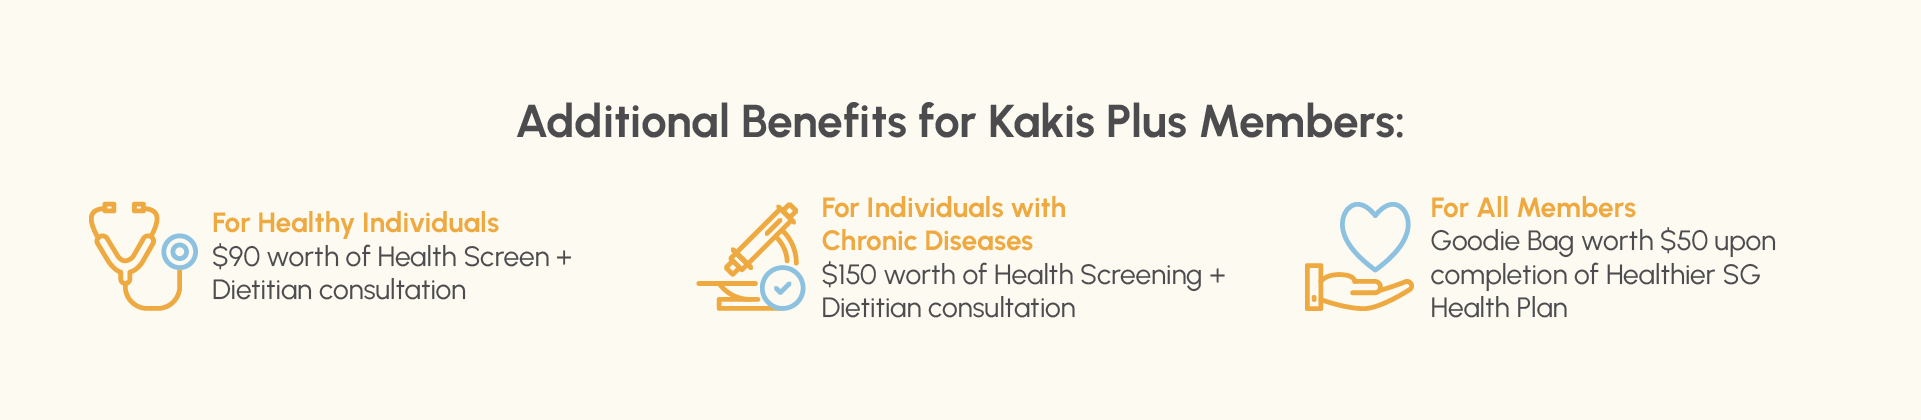 Parkway Medicentre Kakis Plus additional benefits